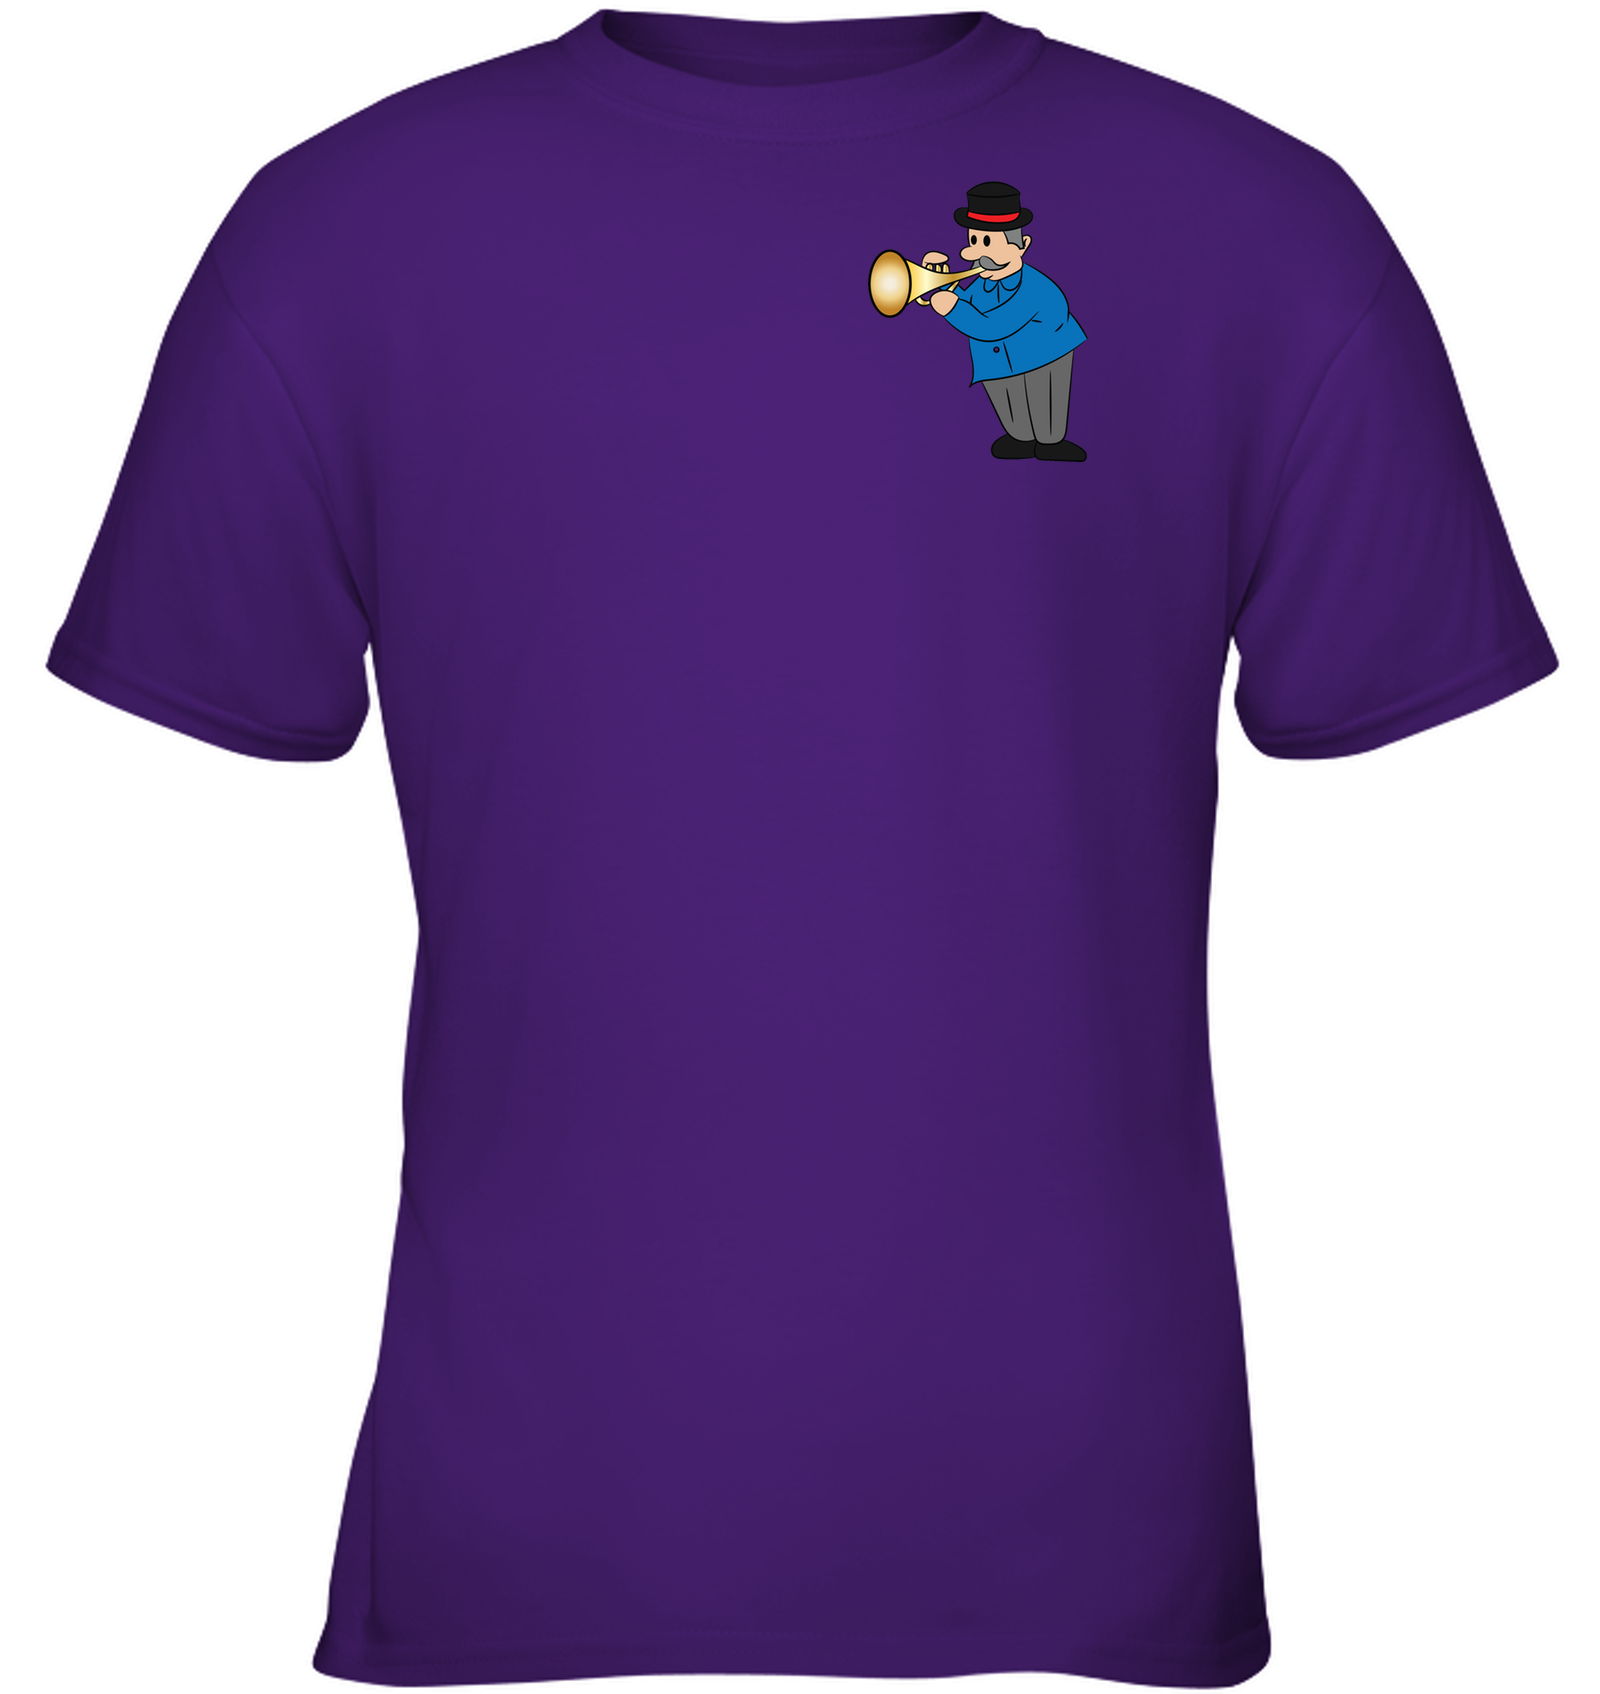 Man with Trumpet (Pocket Size) - Gildan Youth Short Sleeve T-Shirt